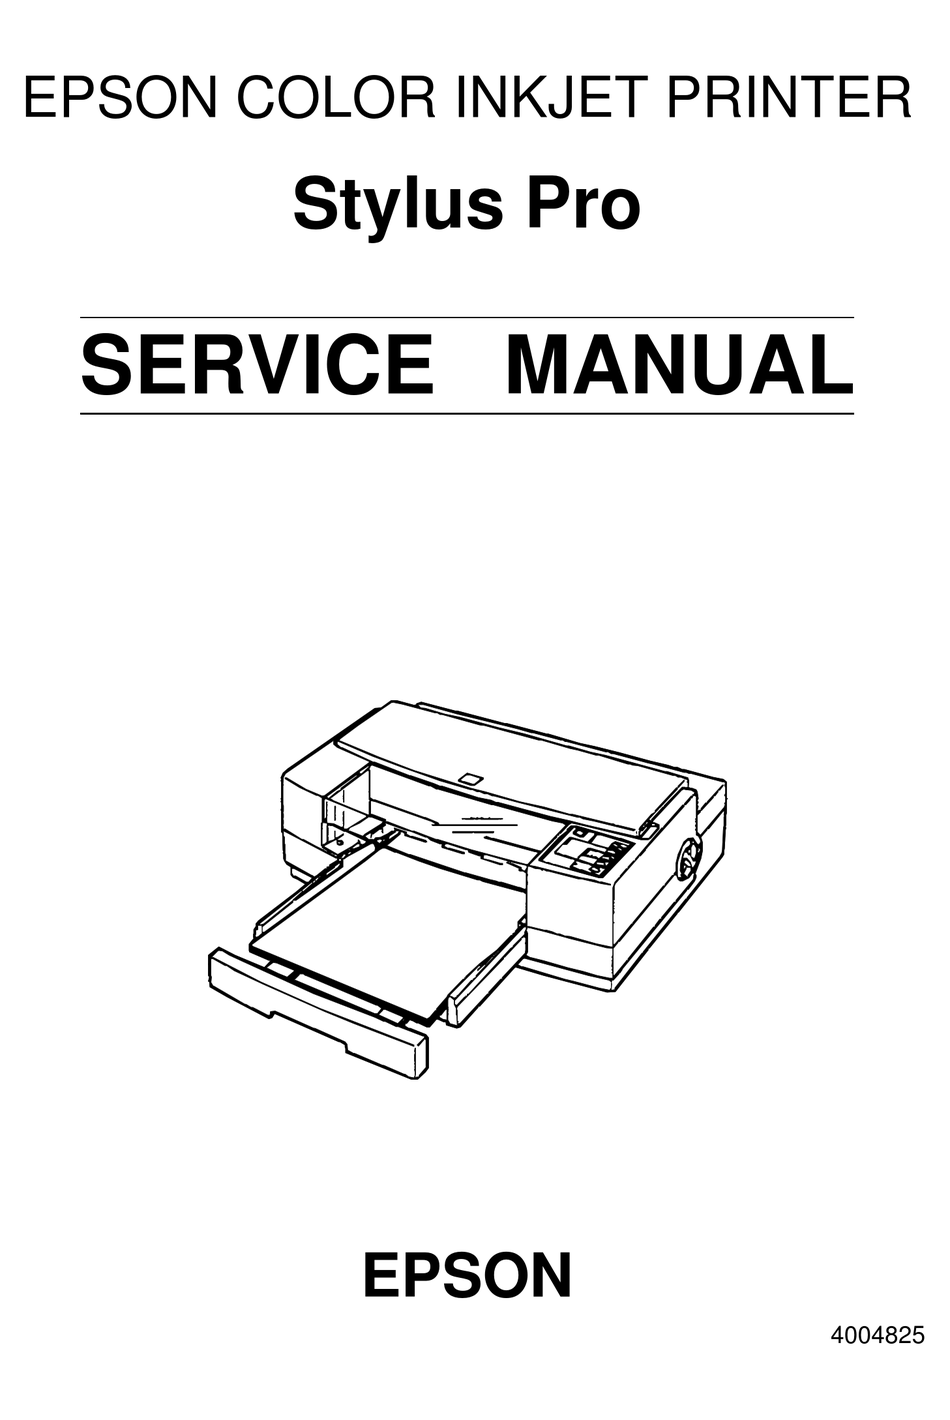 Epson Stylus Pro Service Manual Pdf Download Manualslib 5573